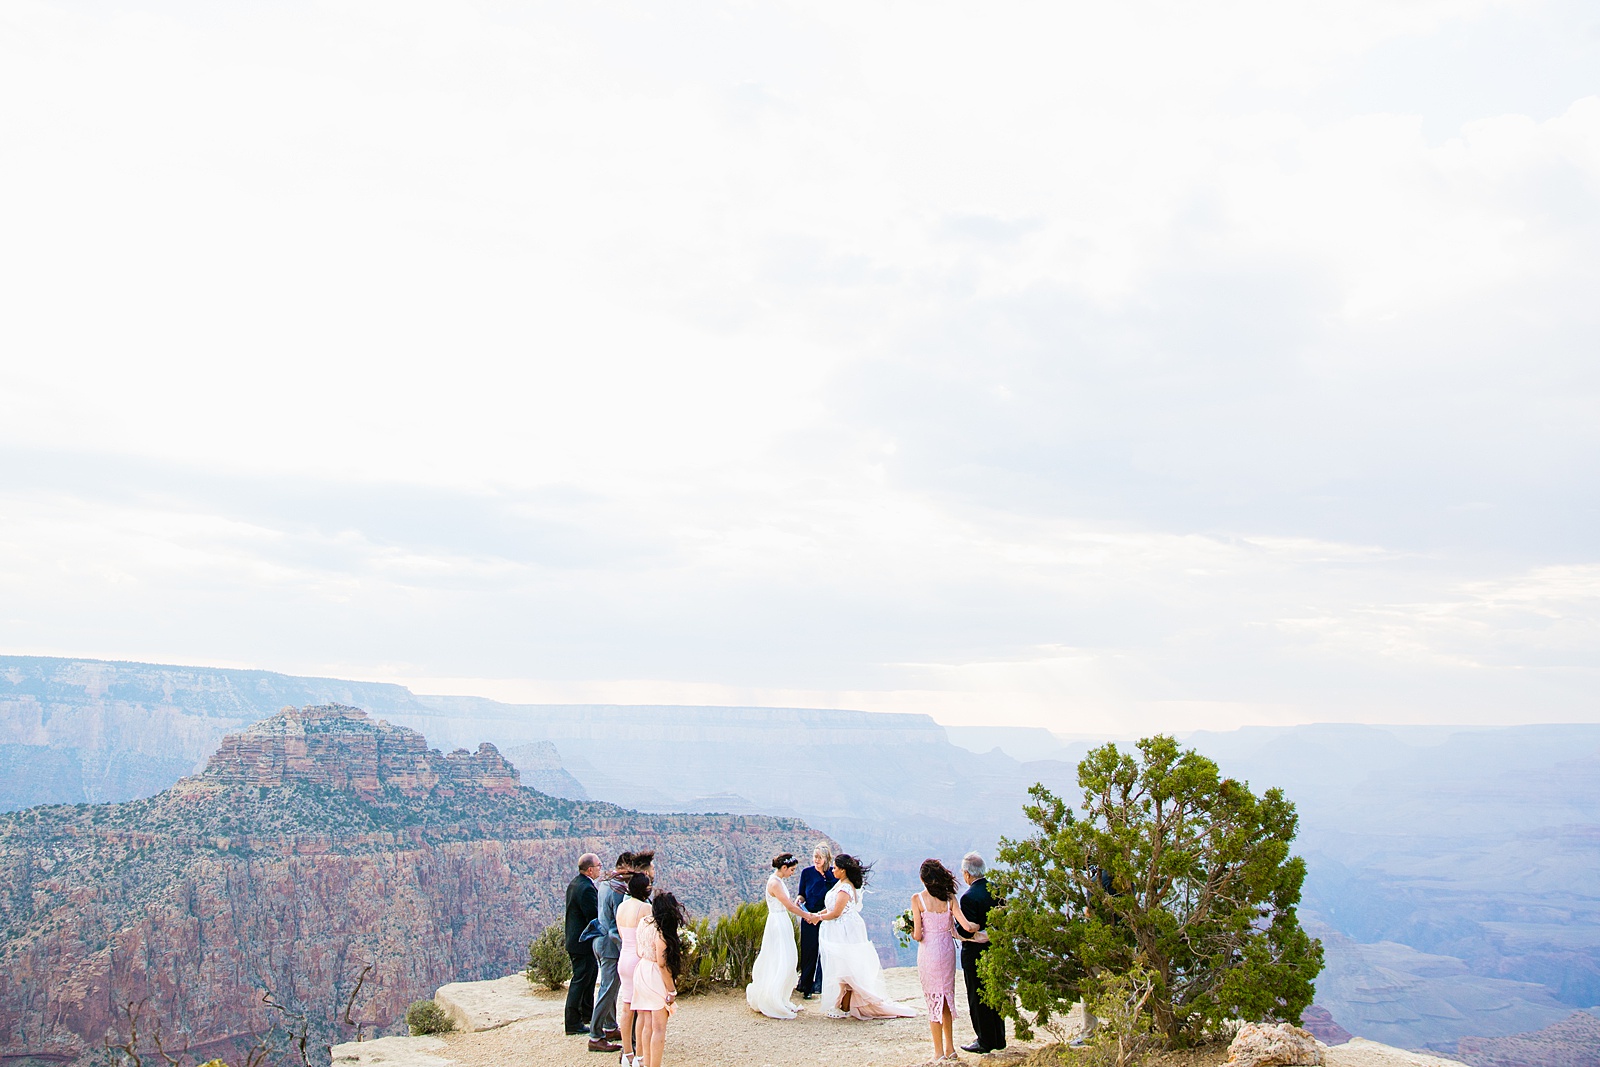 Same sex wedding ceremony at Moran Point, Grand Canyon by Arizona elopement photographer PMA Photography.